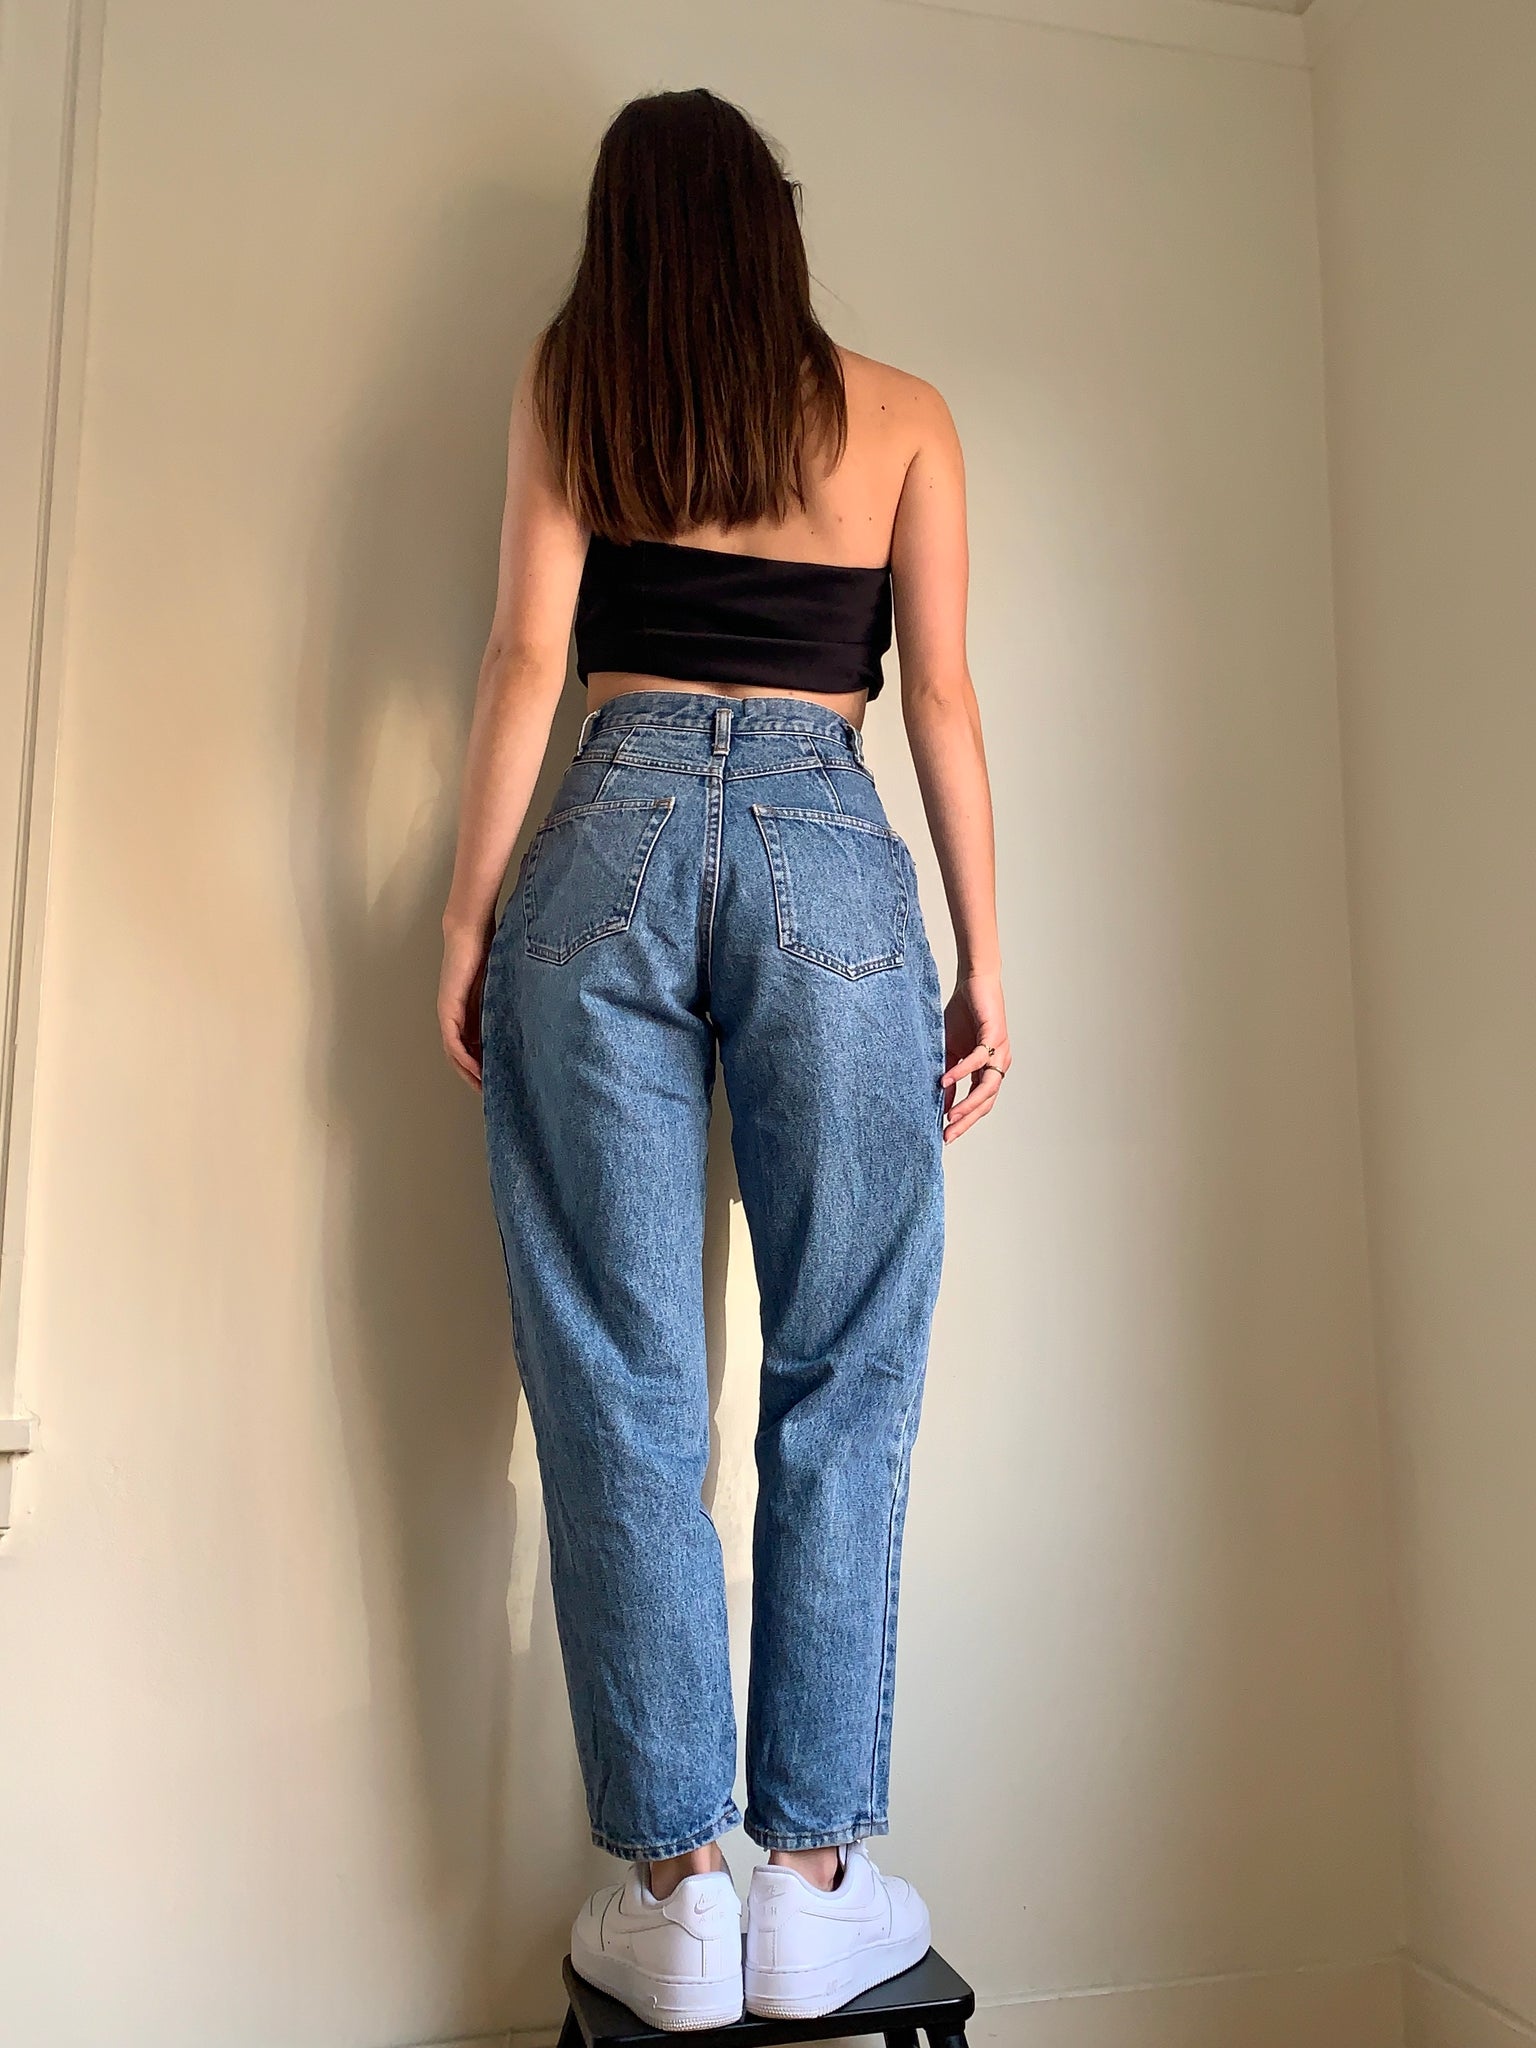 Vintage 1980s Gap Jeans